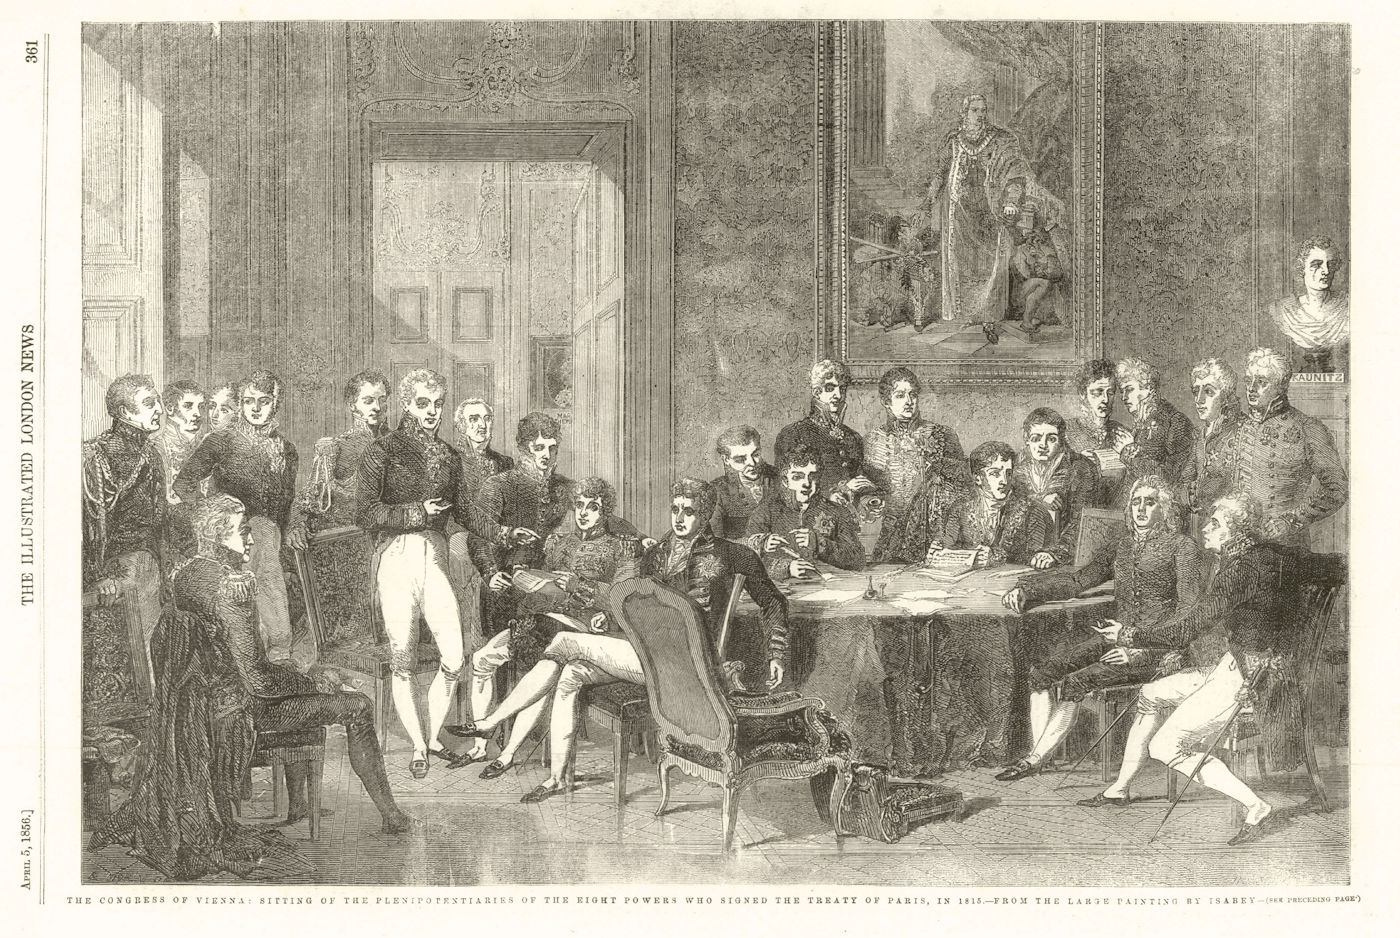 Congress of Vienna: Plenipotentiaries 8 powers sitting Treaty of Paris 1815 1856